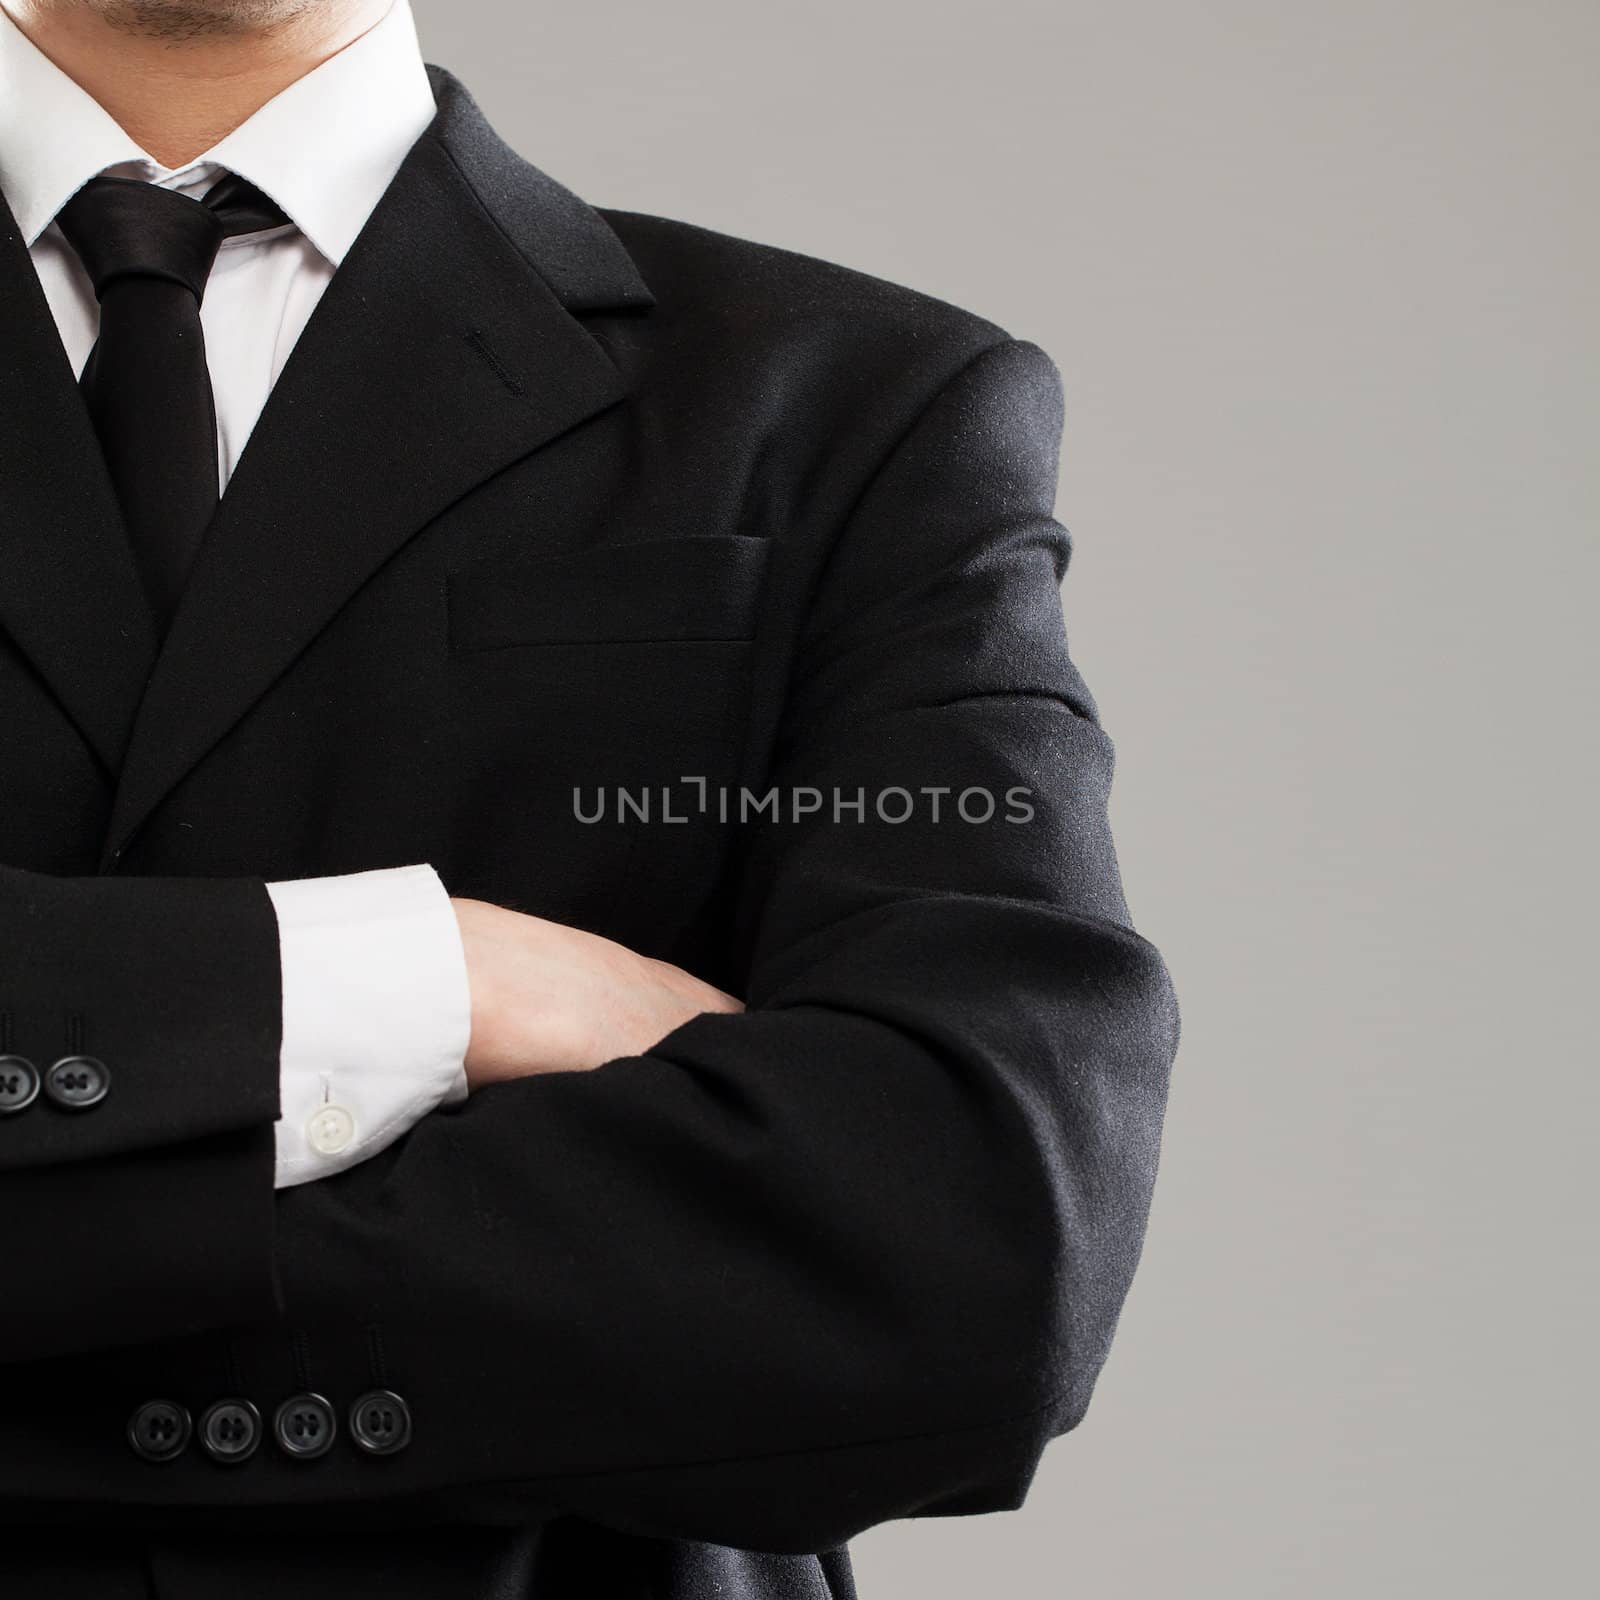 Businessman's torso in suit by rufatjumali